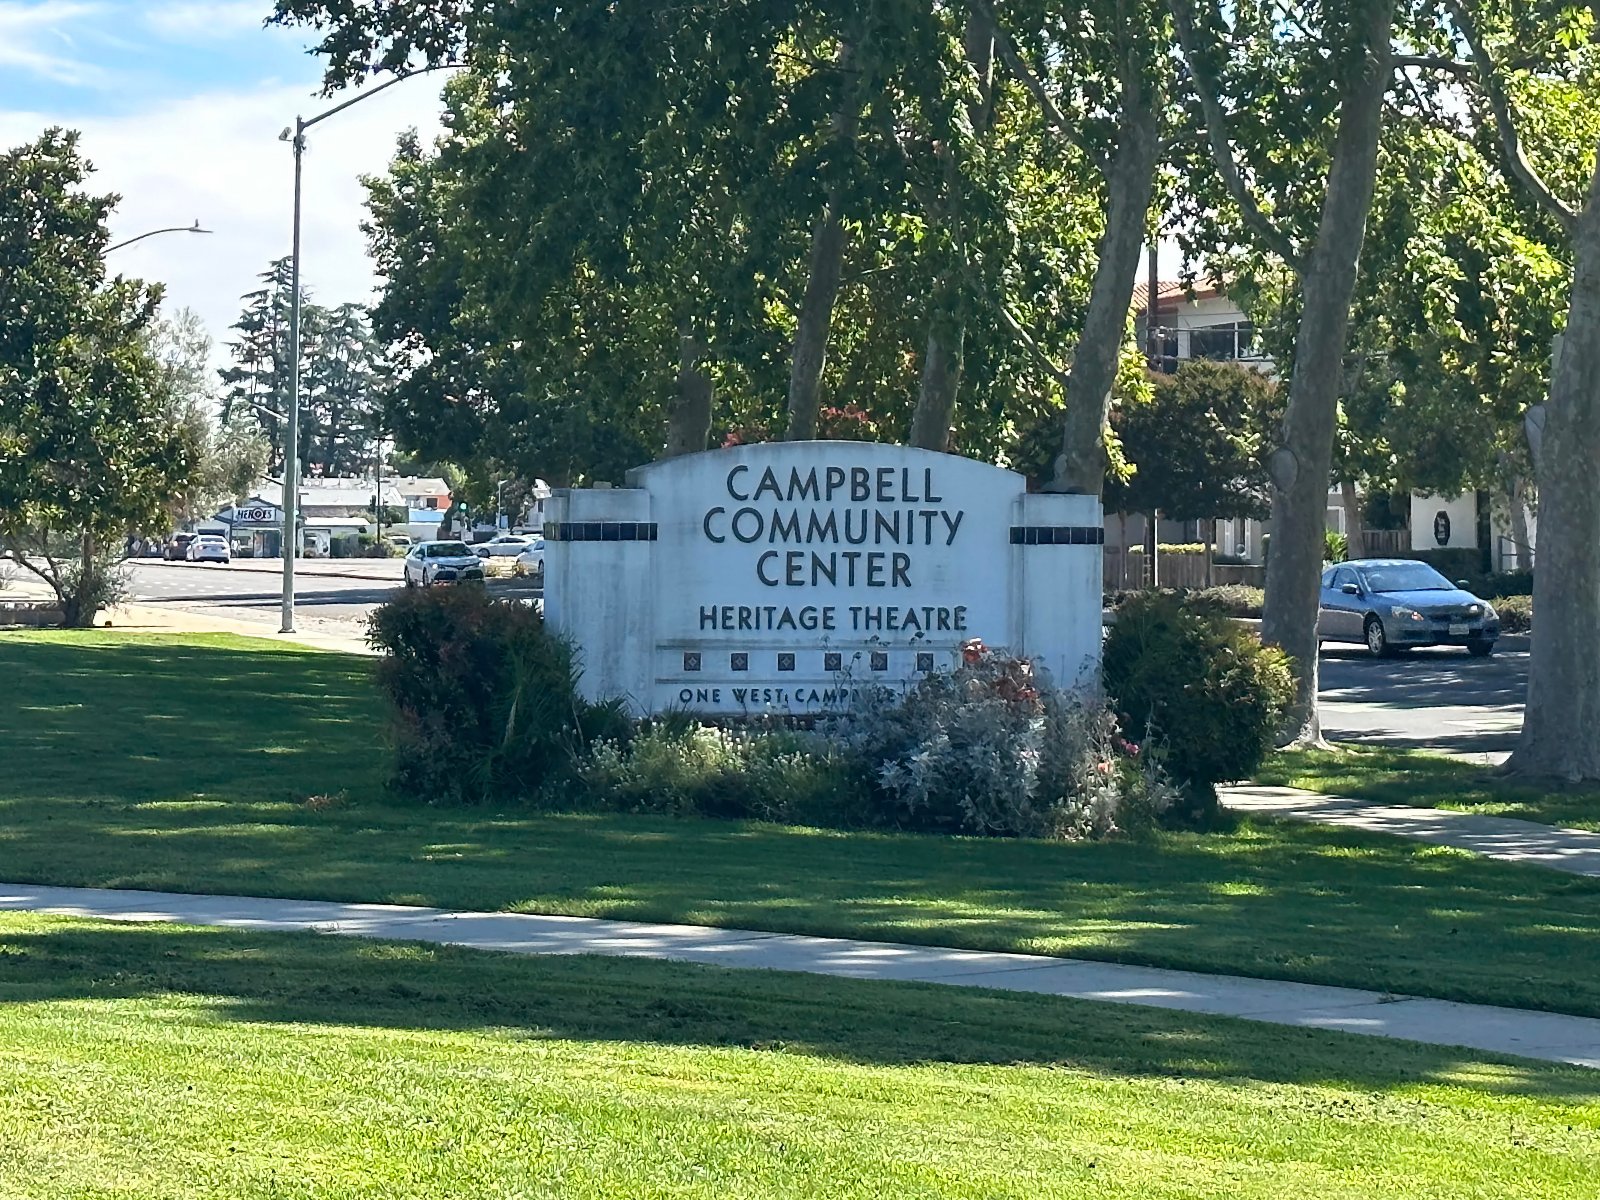 Campbell Community Center